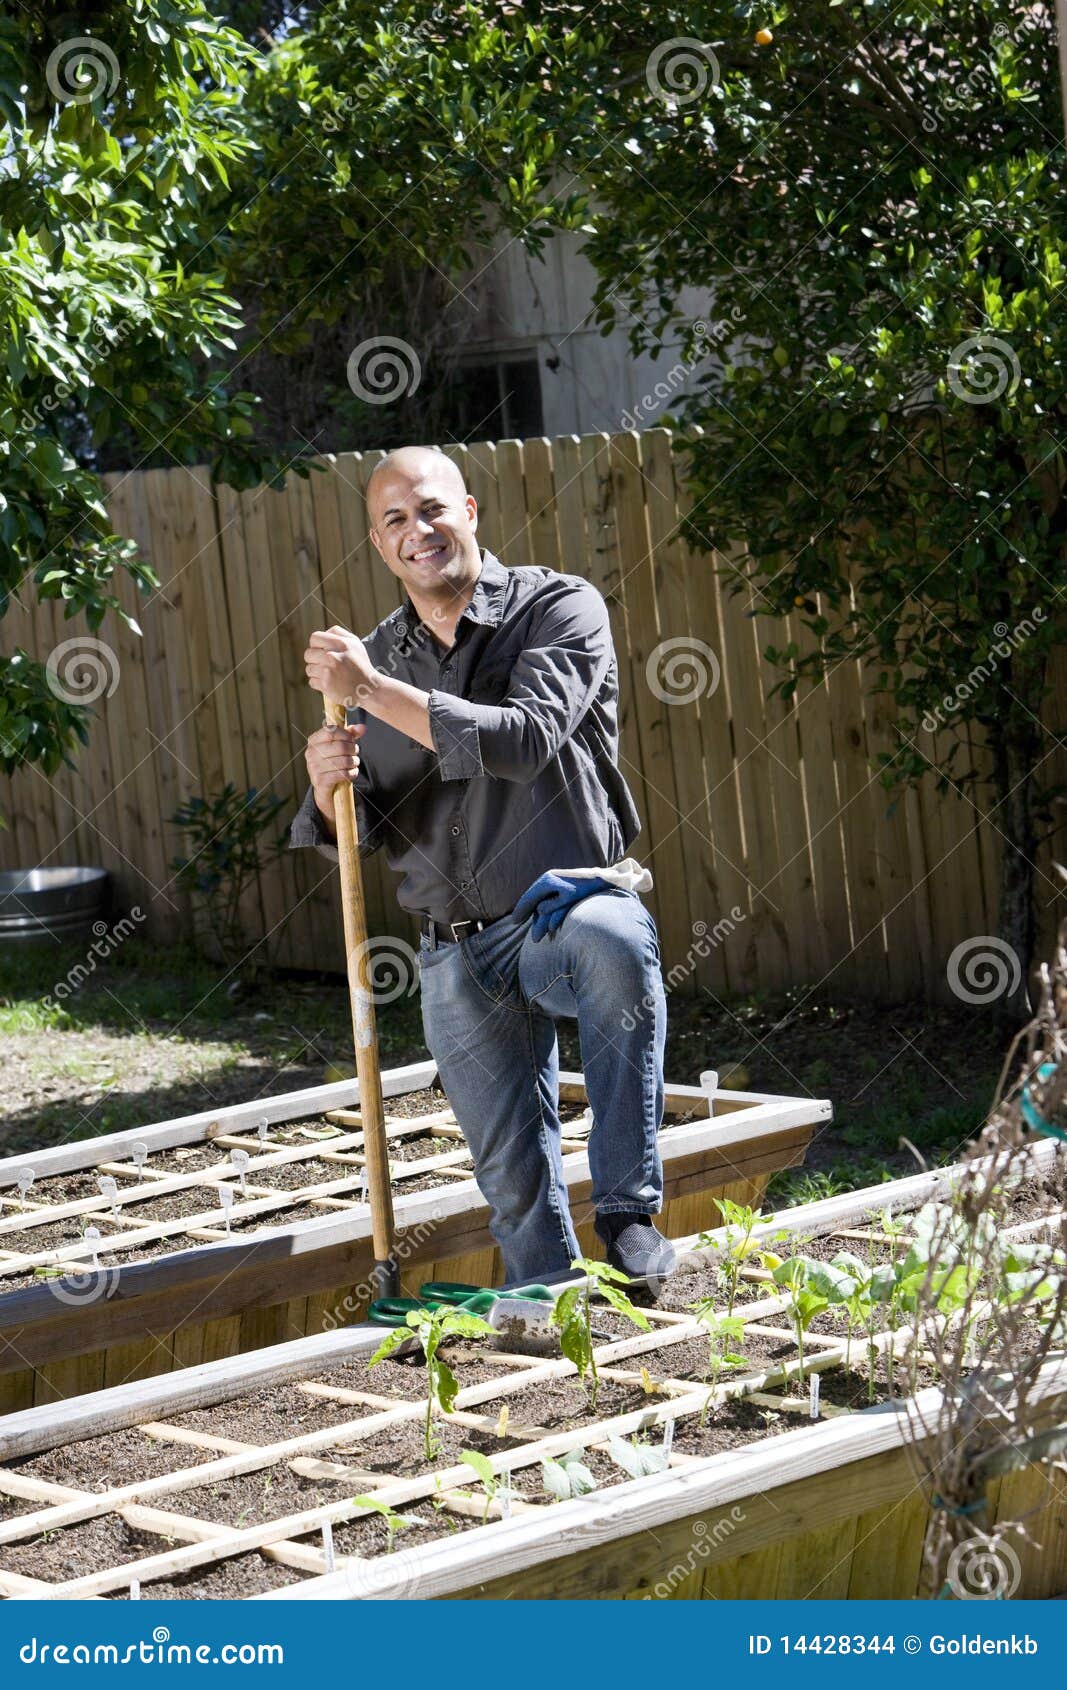 man working vegetable garden backyard 14428344